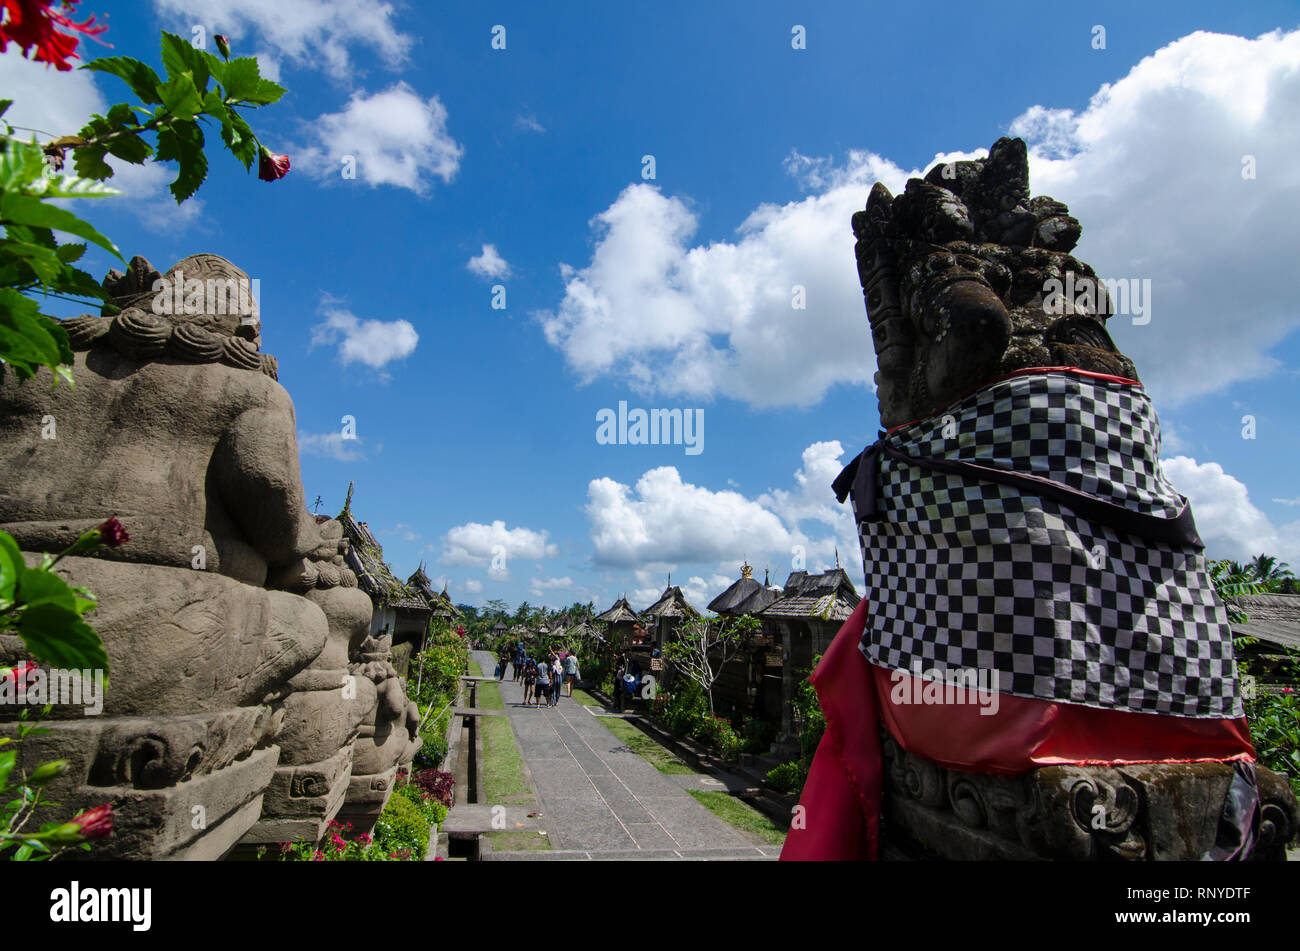 Penglipuran Village with blue skies above, Kubu, Bangli, Bali, Indonesia Stock Photo